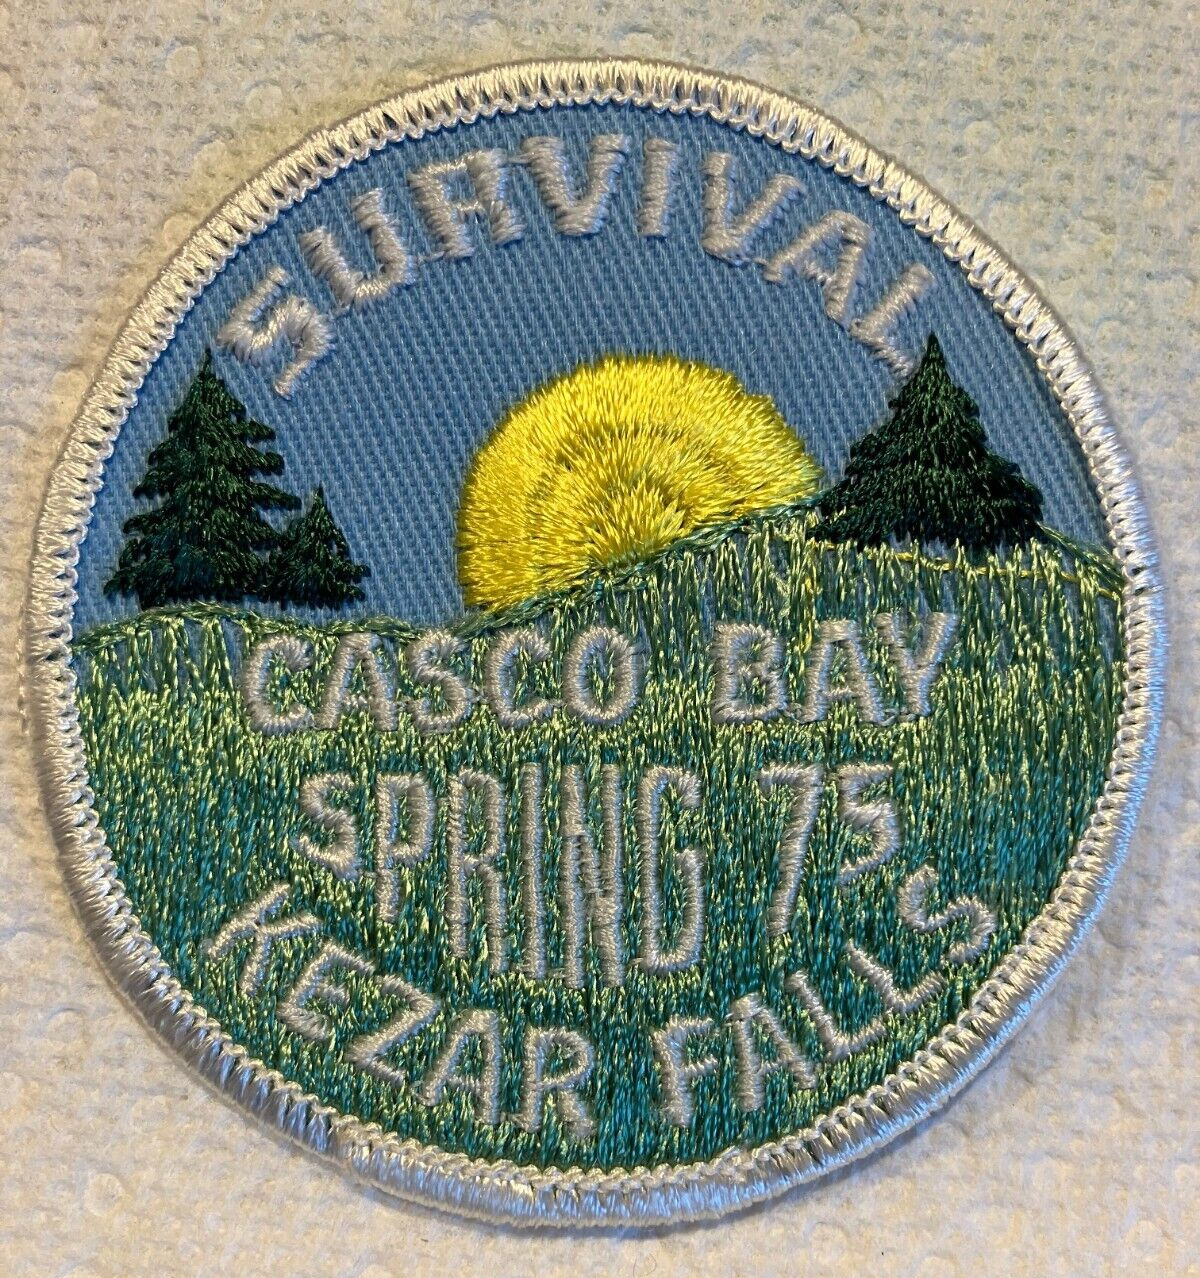 1975 Casco Bay Kezar Fall Survival Twill Embroidery Patch Boy Scout BSA